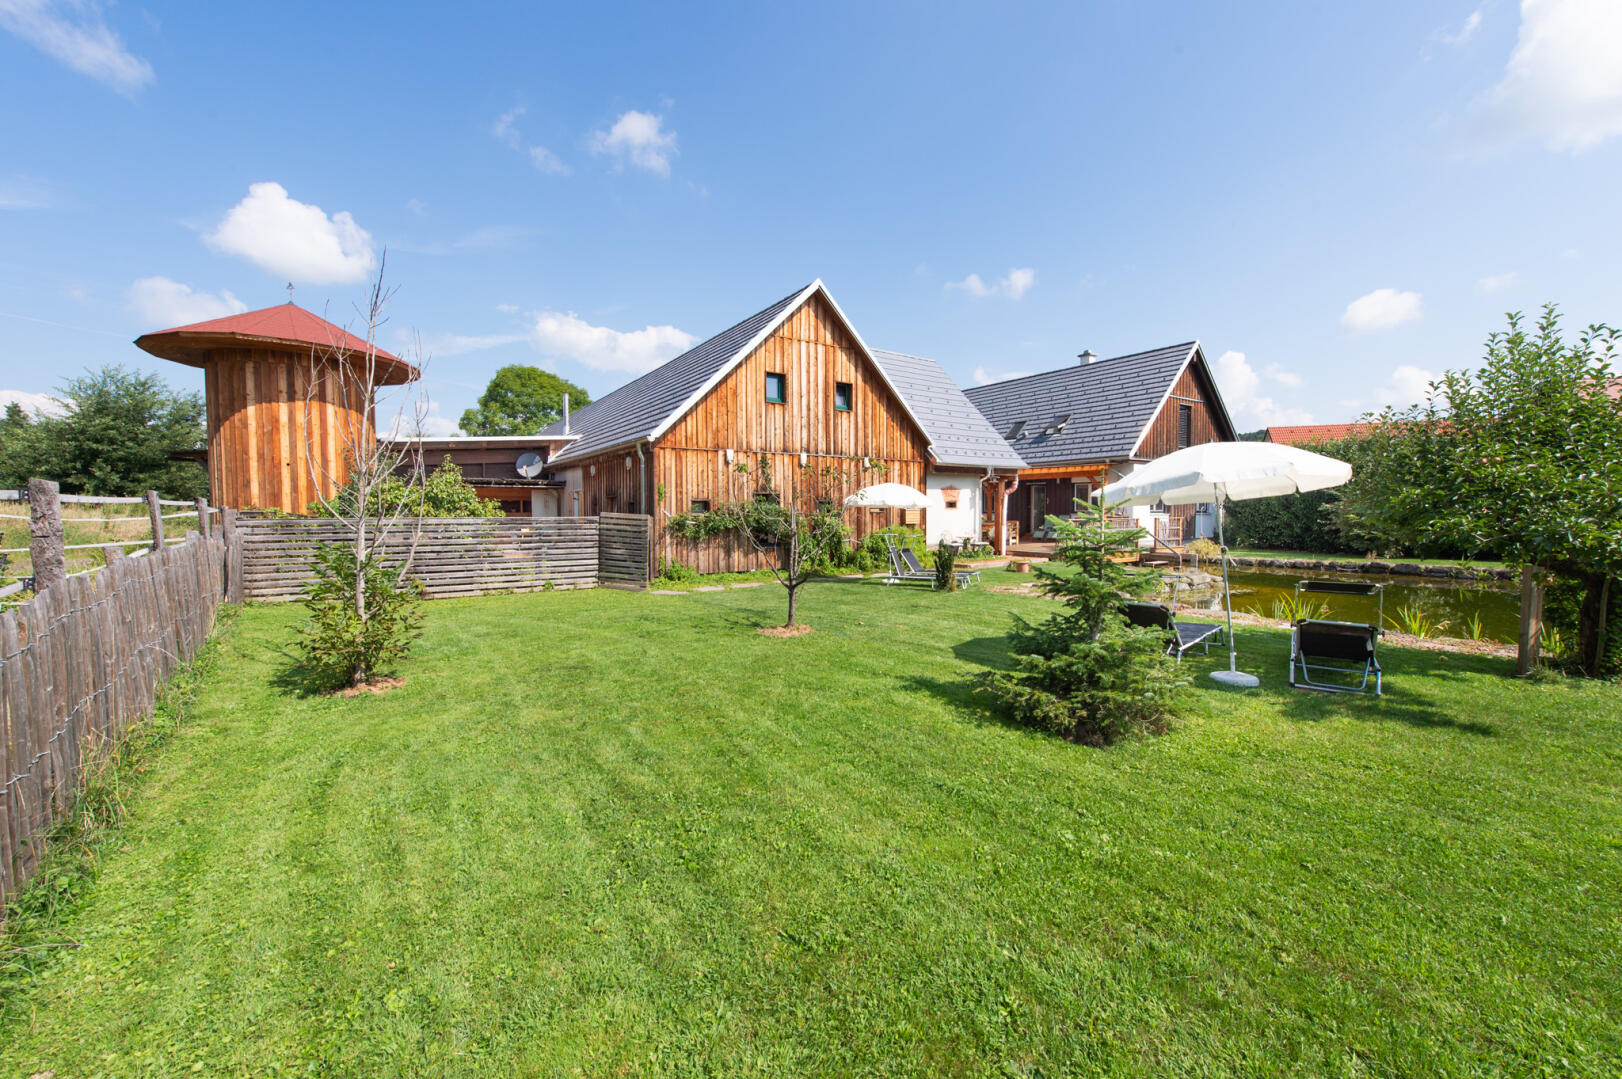 Haus zu kaufen: Stang 24, 8361 Hatzendorf - Liegenschaft - Stang-02